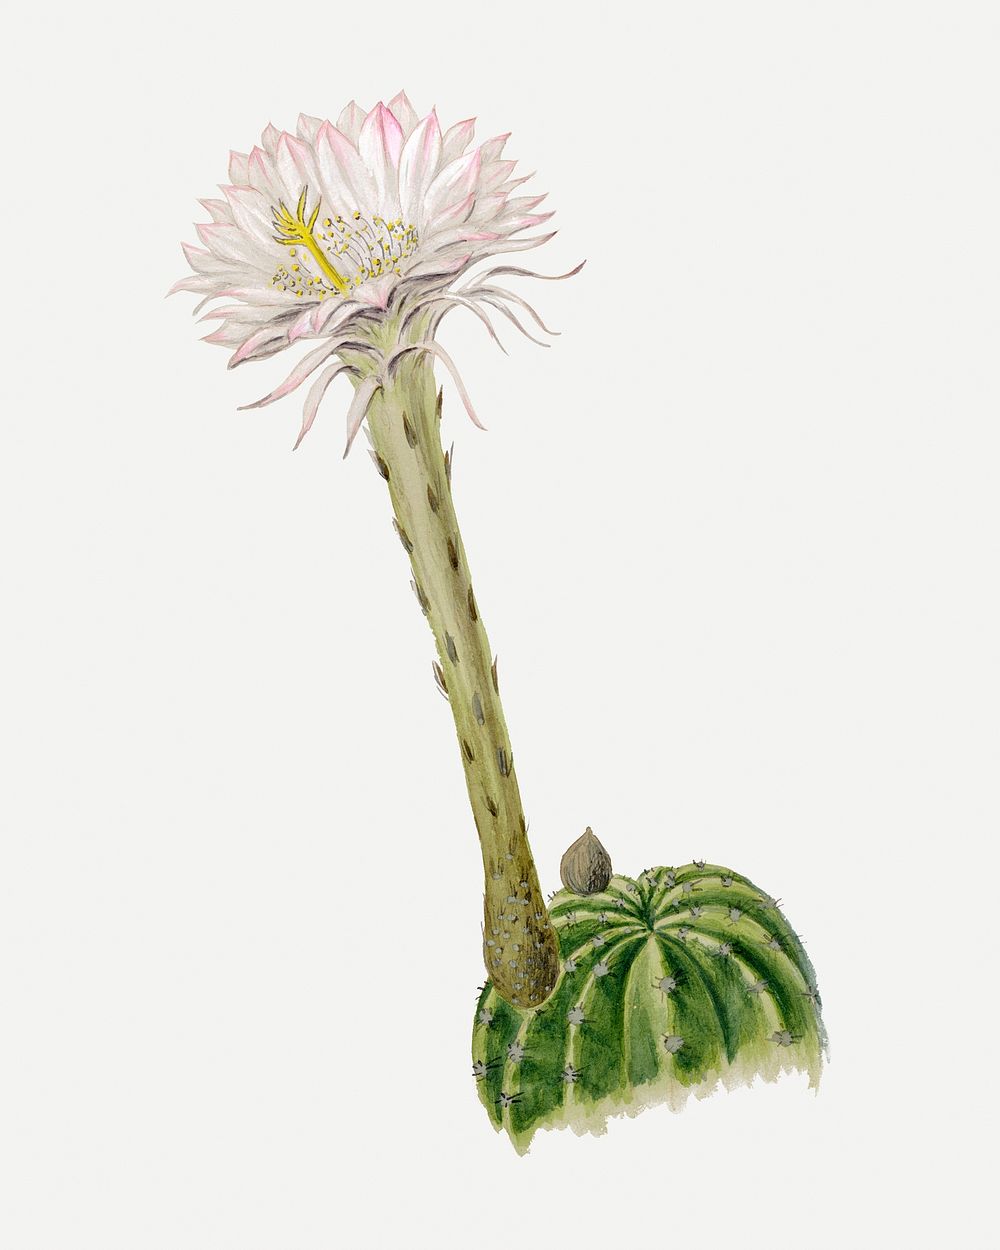 Flower sticker, aesthetic vintage white Hedgehog cactus illustration, classic design element psd